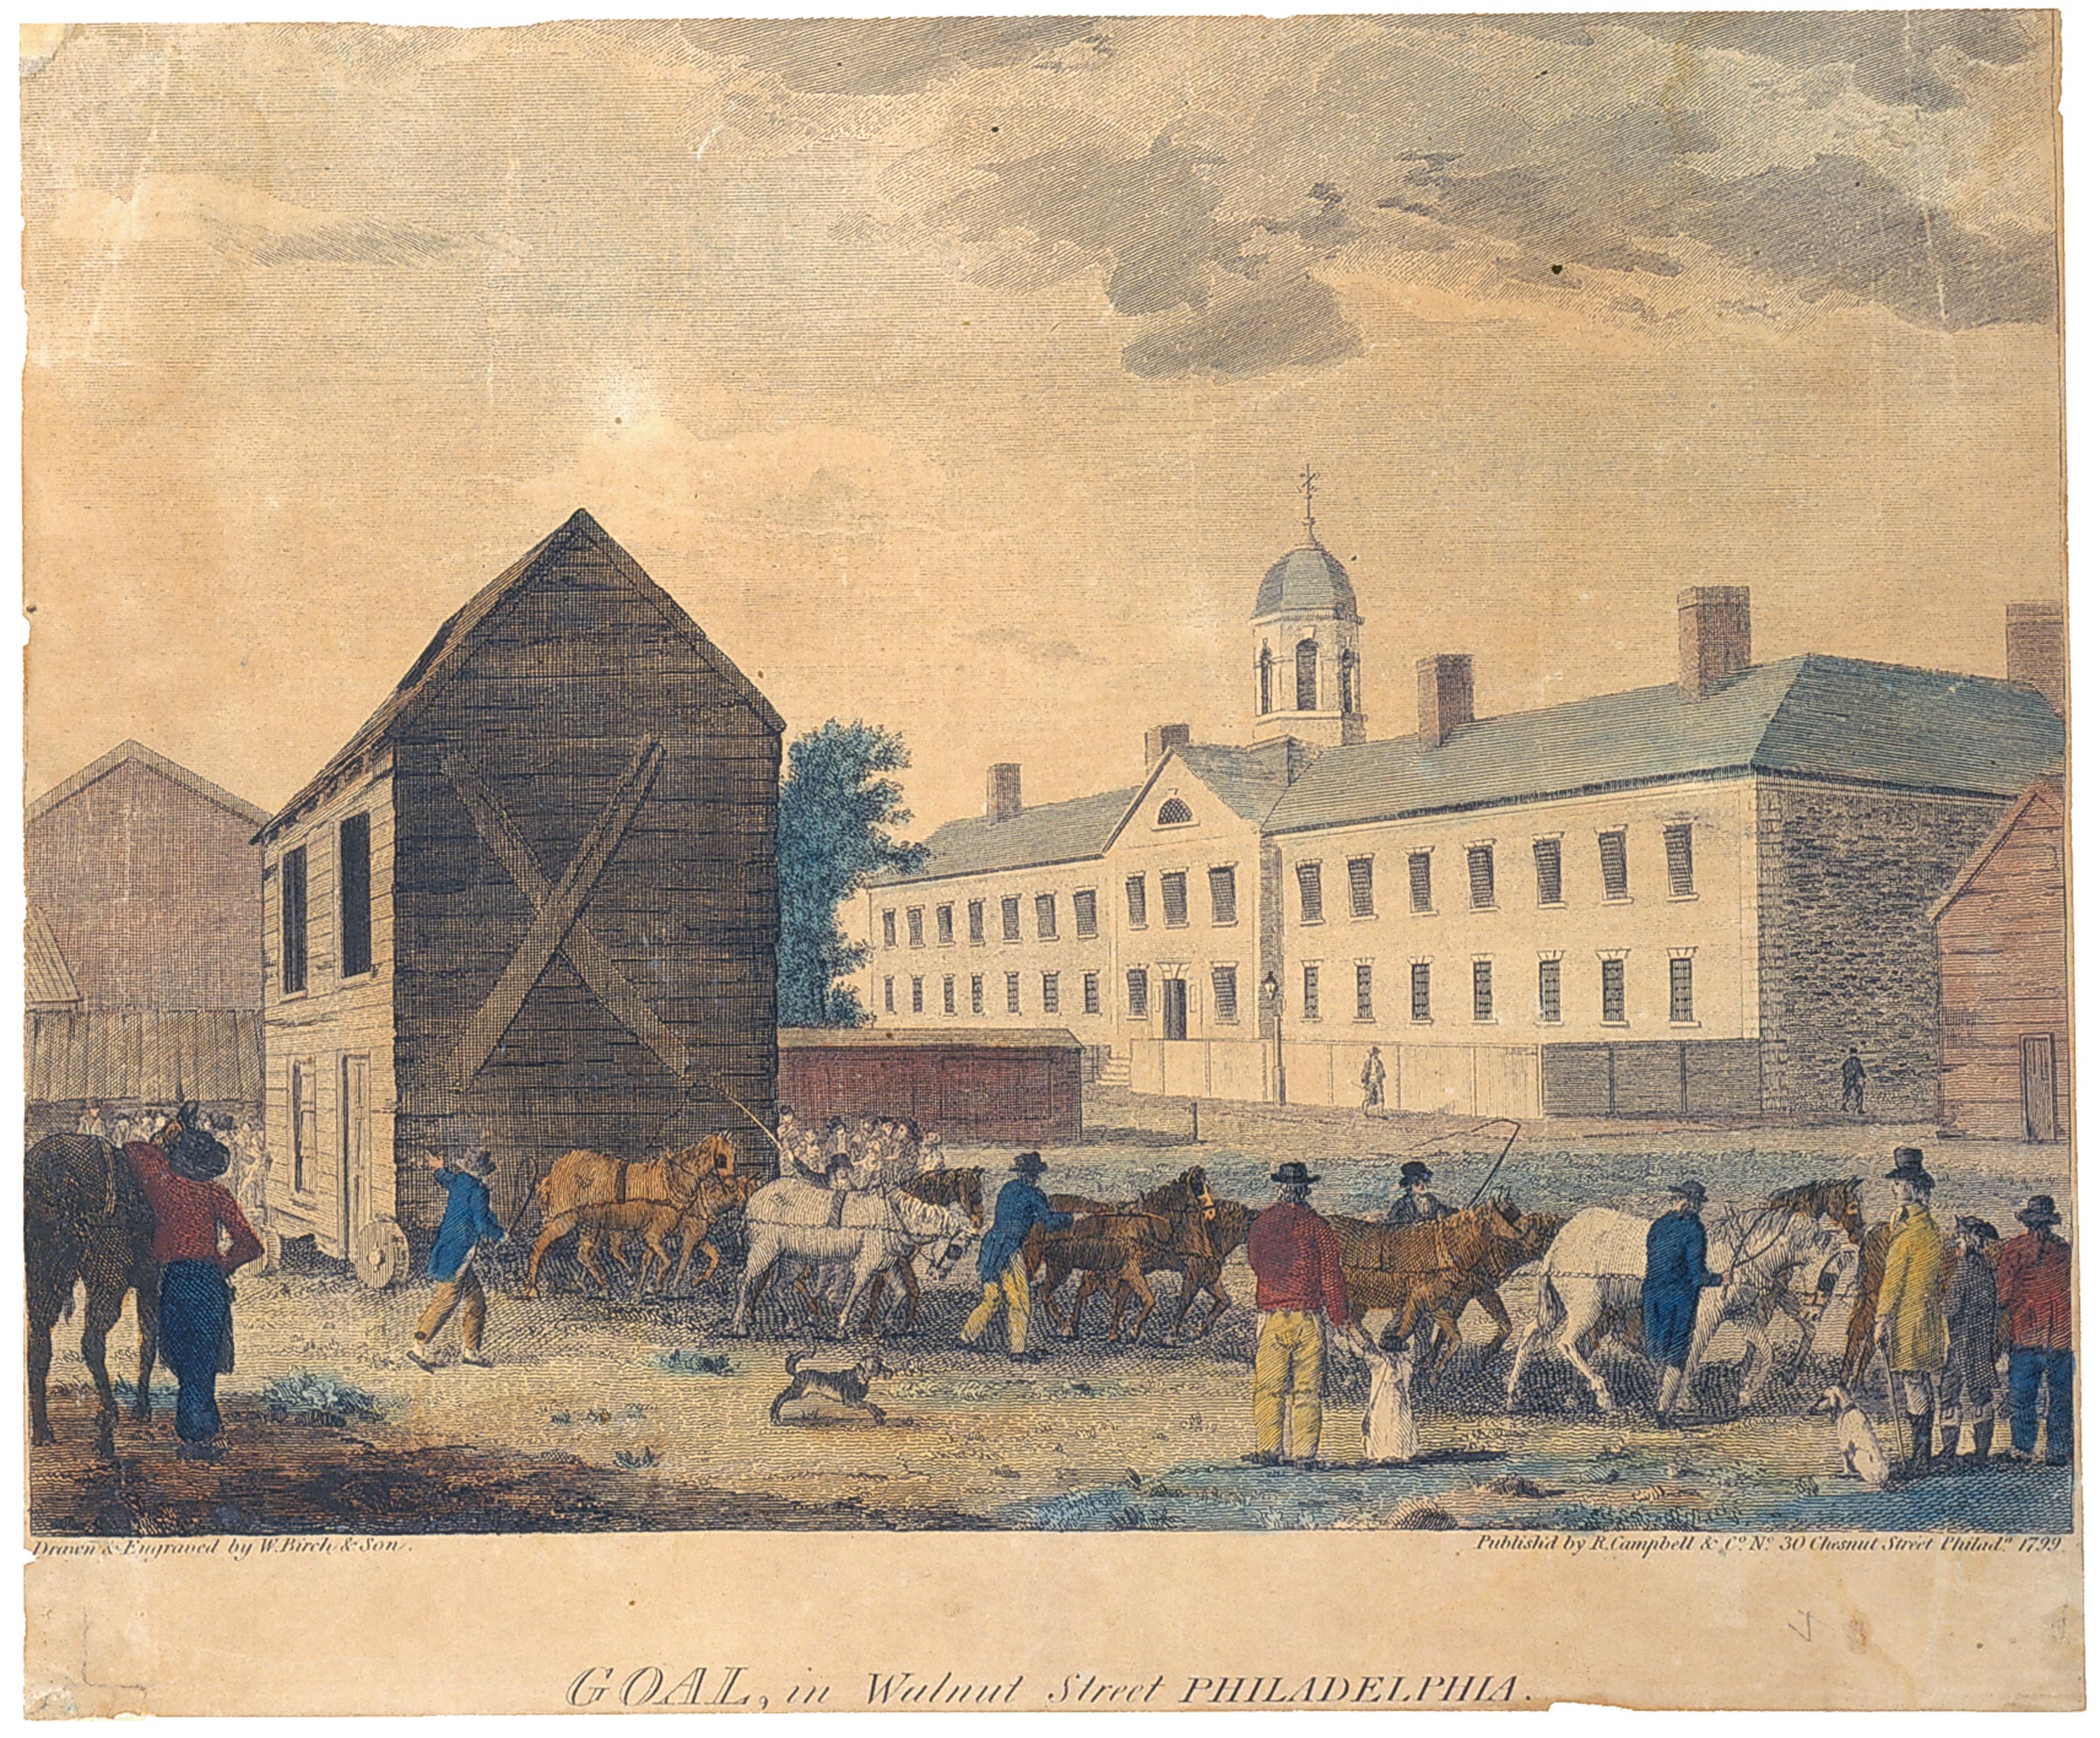 W. Birch & Sons, Goal, in Walnut Street, Philadelphia, 1799